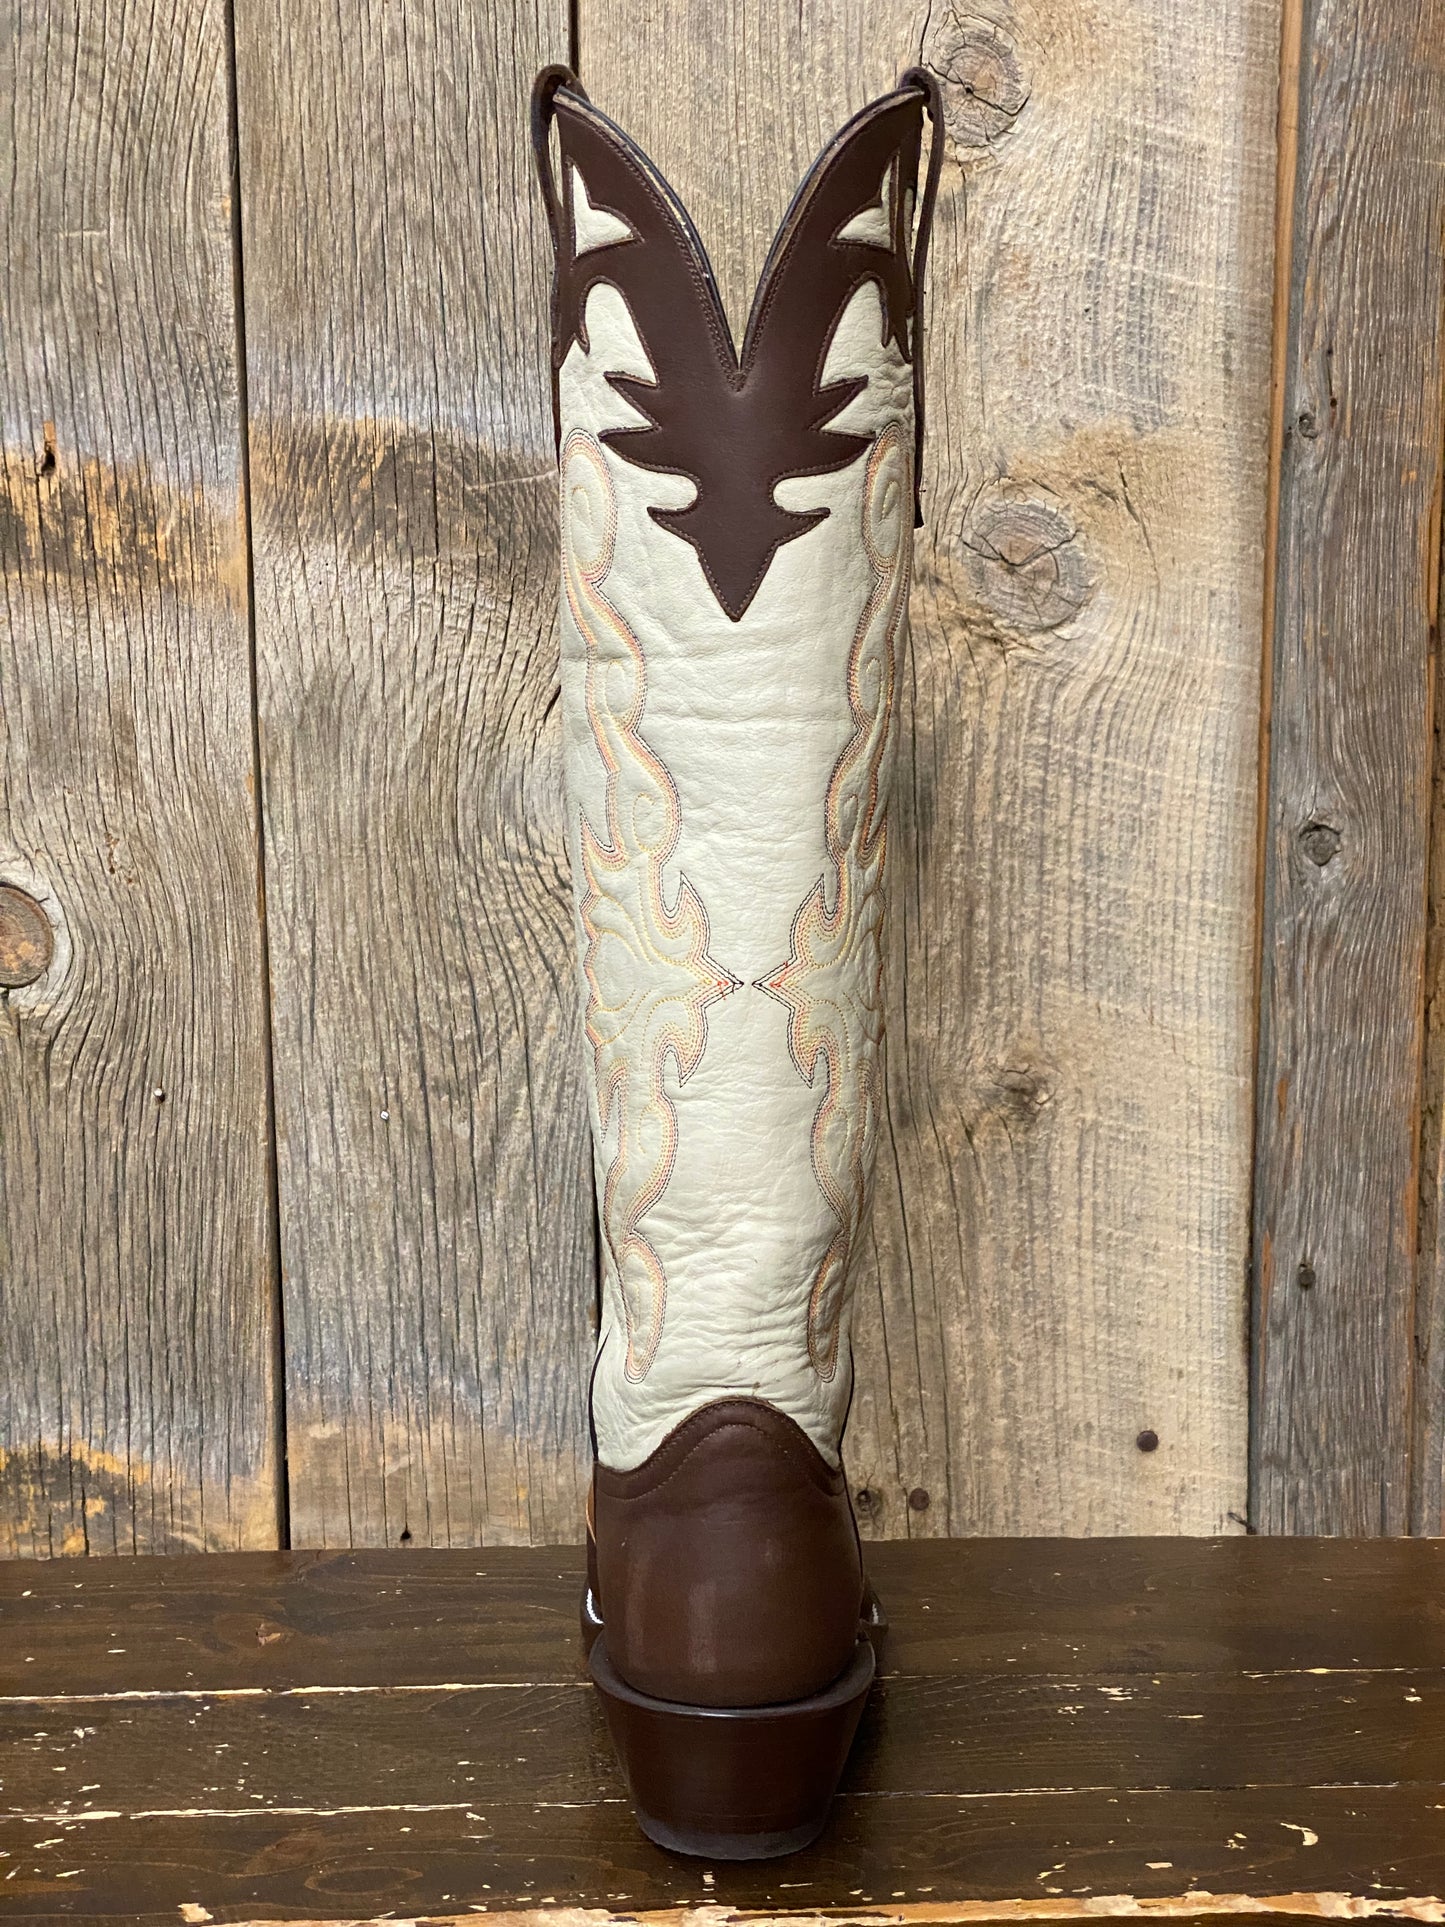 Honcho Solano® Buckaroo Full Grain Leather Tall Top Cowboy Boots - Bone / Saddle